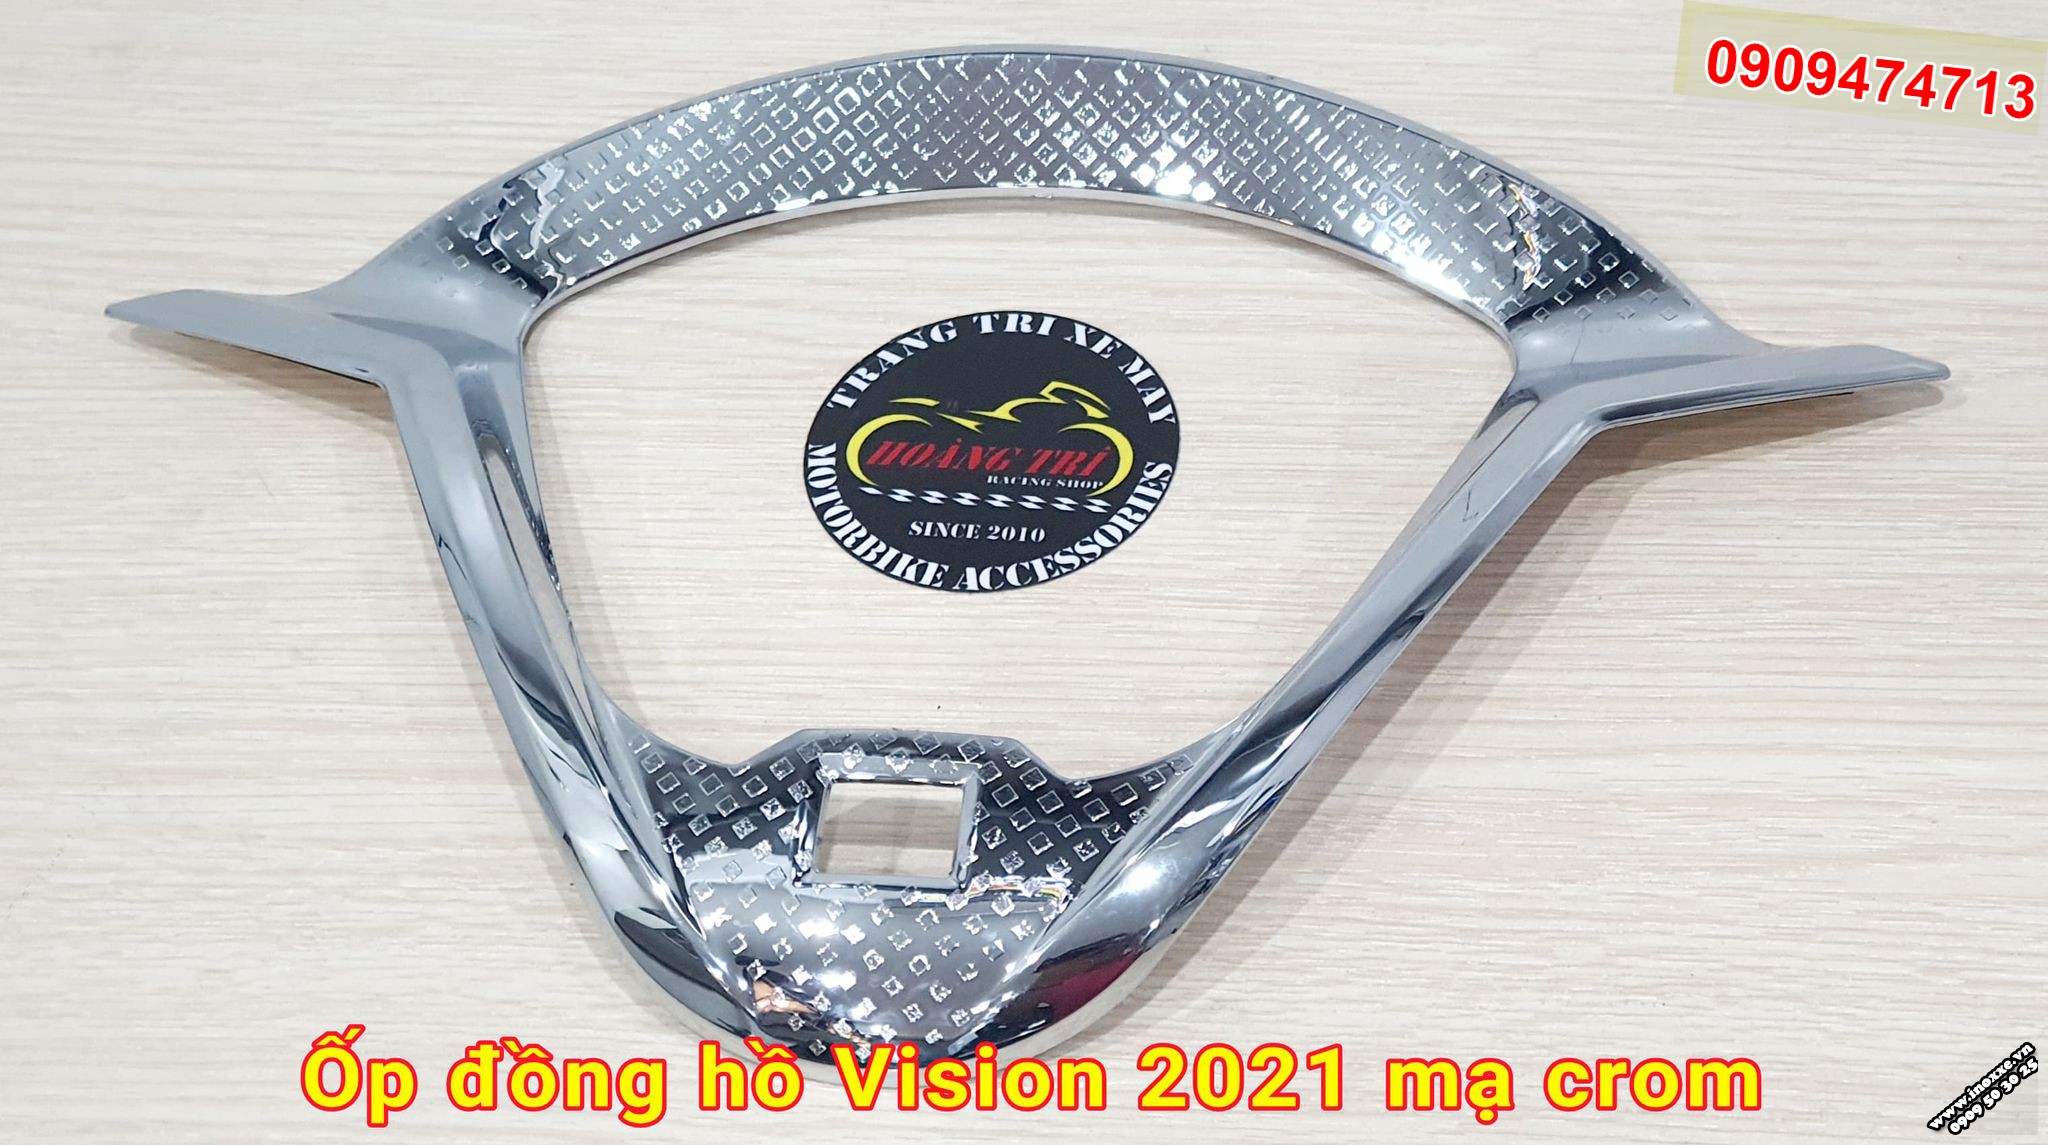 Ốp đồng hồ mạ Crom Vision 2021